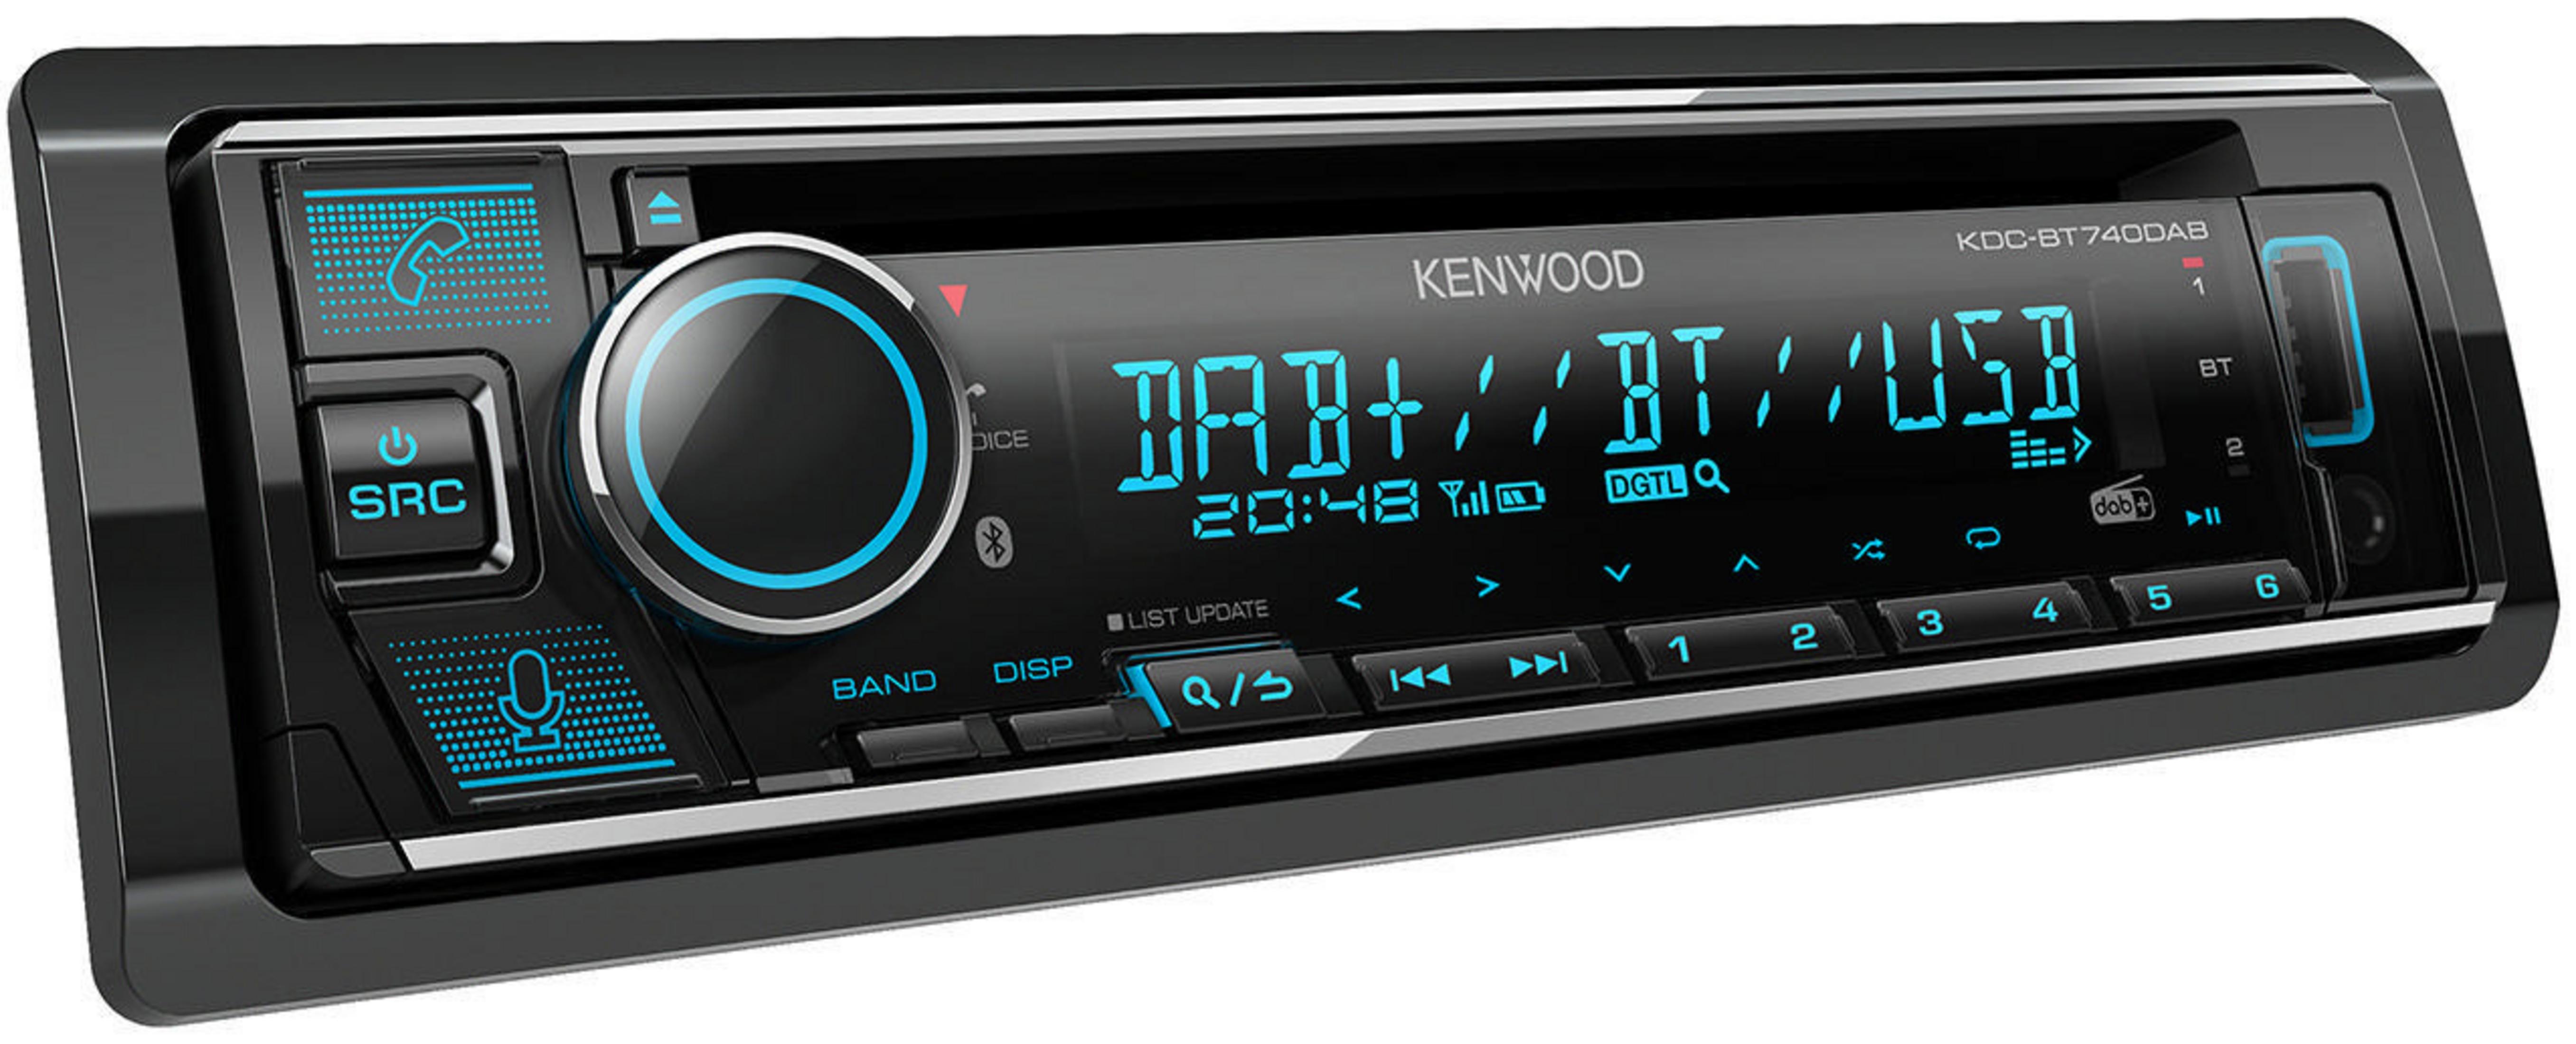 KENWOOD KDC-BT 740 DAB Watt Autoradio 50 DIN, 1